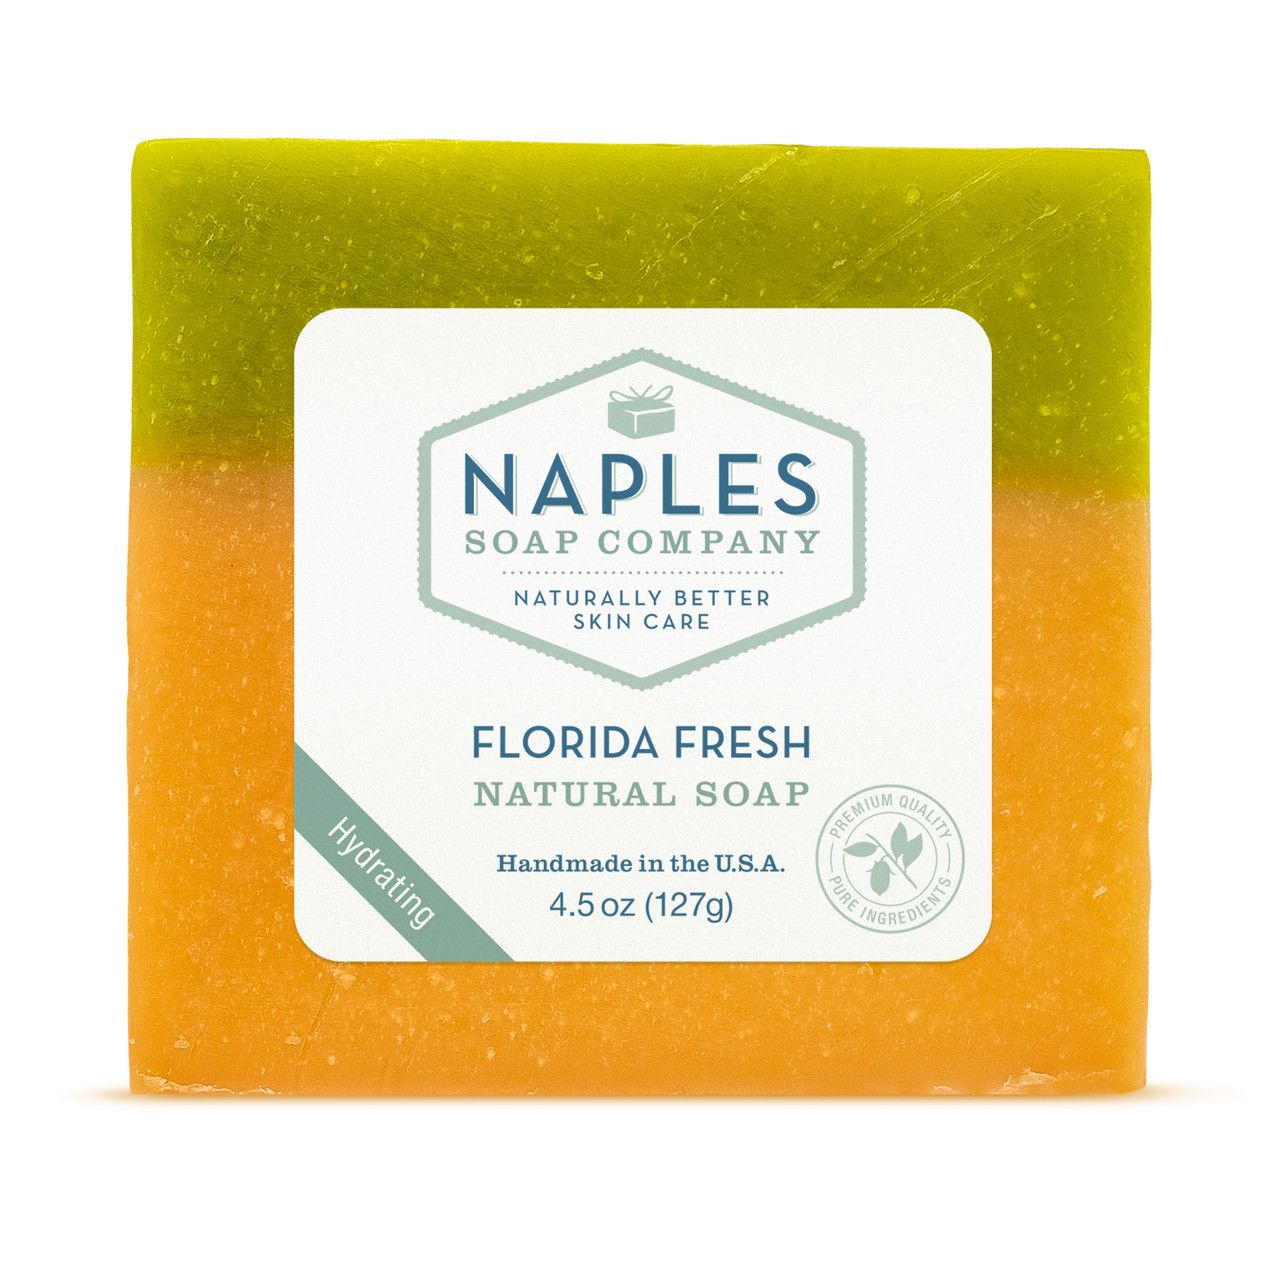 Florida Fresh Natural Soap | Naples Soap Company